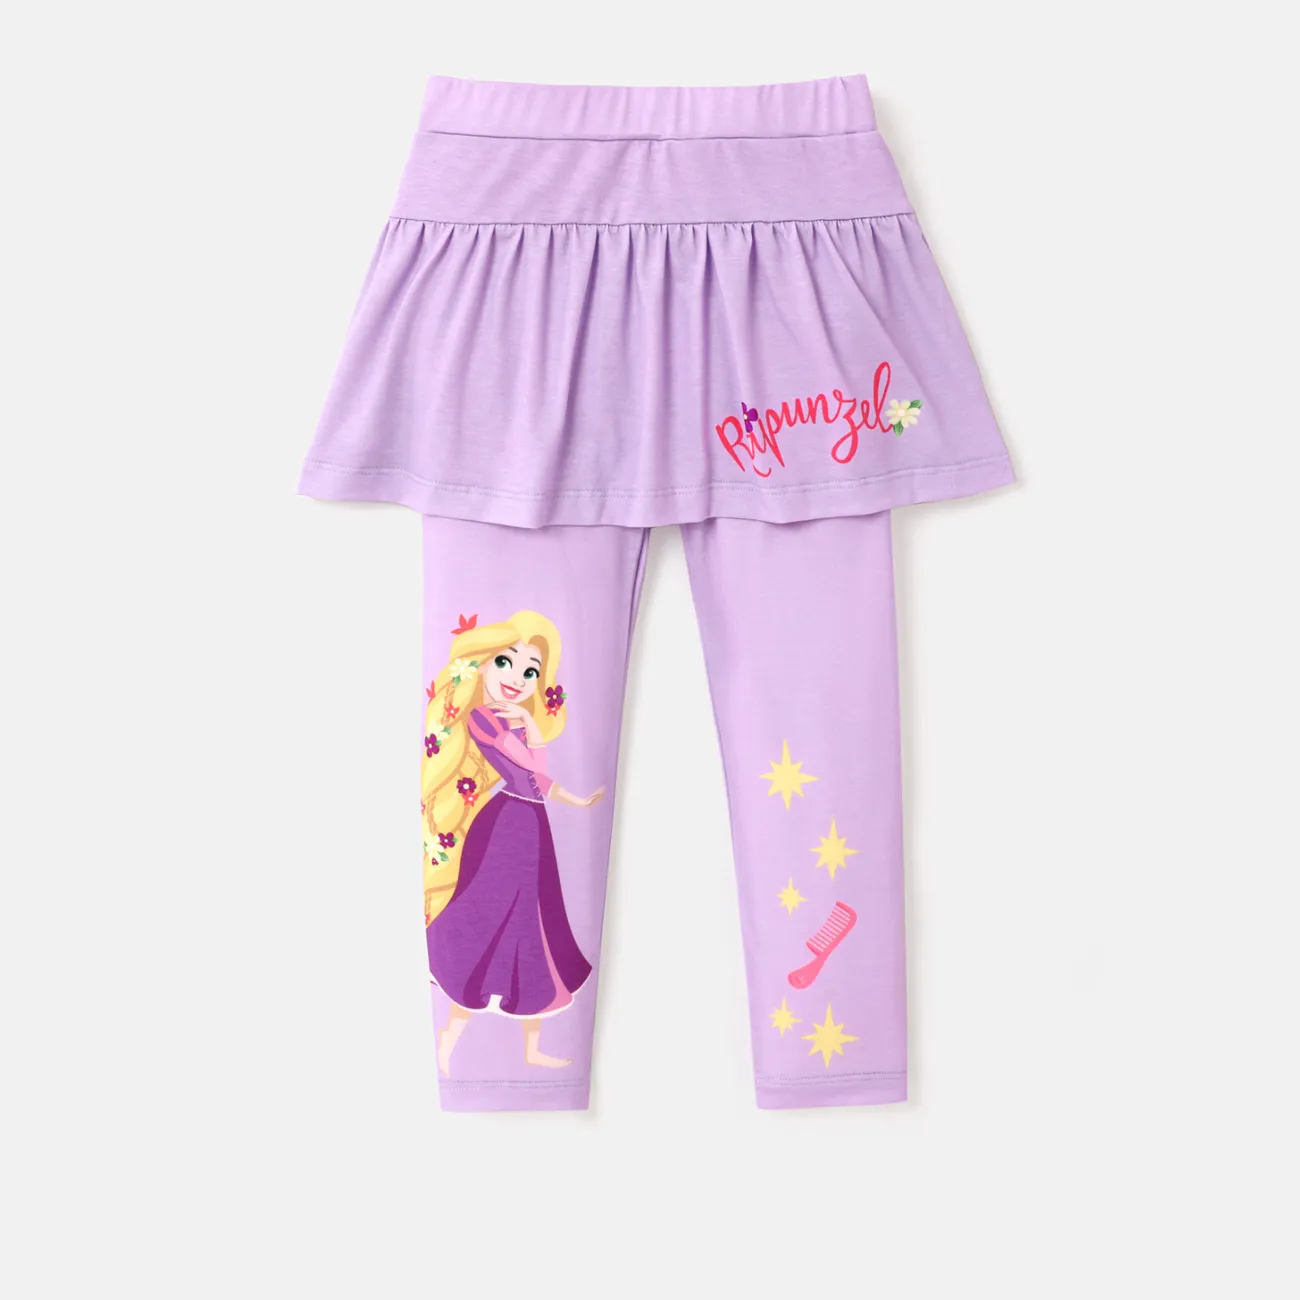 Disney Princess Toddler Girl Naia™ Character Print Ruffle Overlay 2 In 1 Leggings Purple big image 1